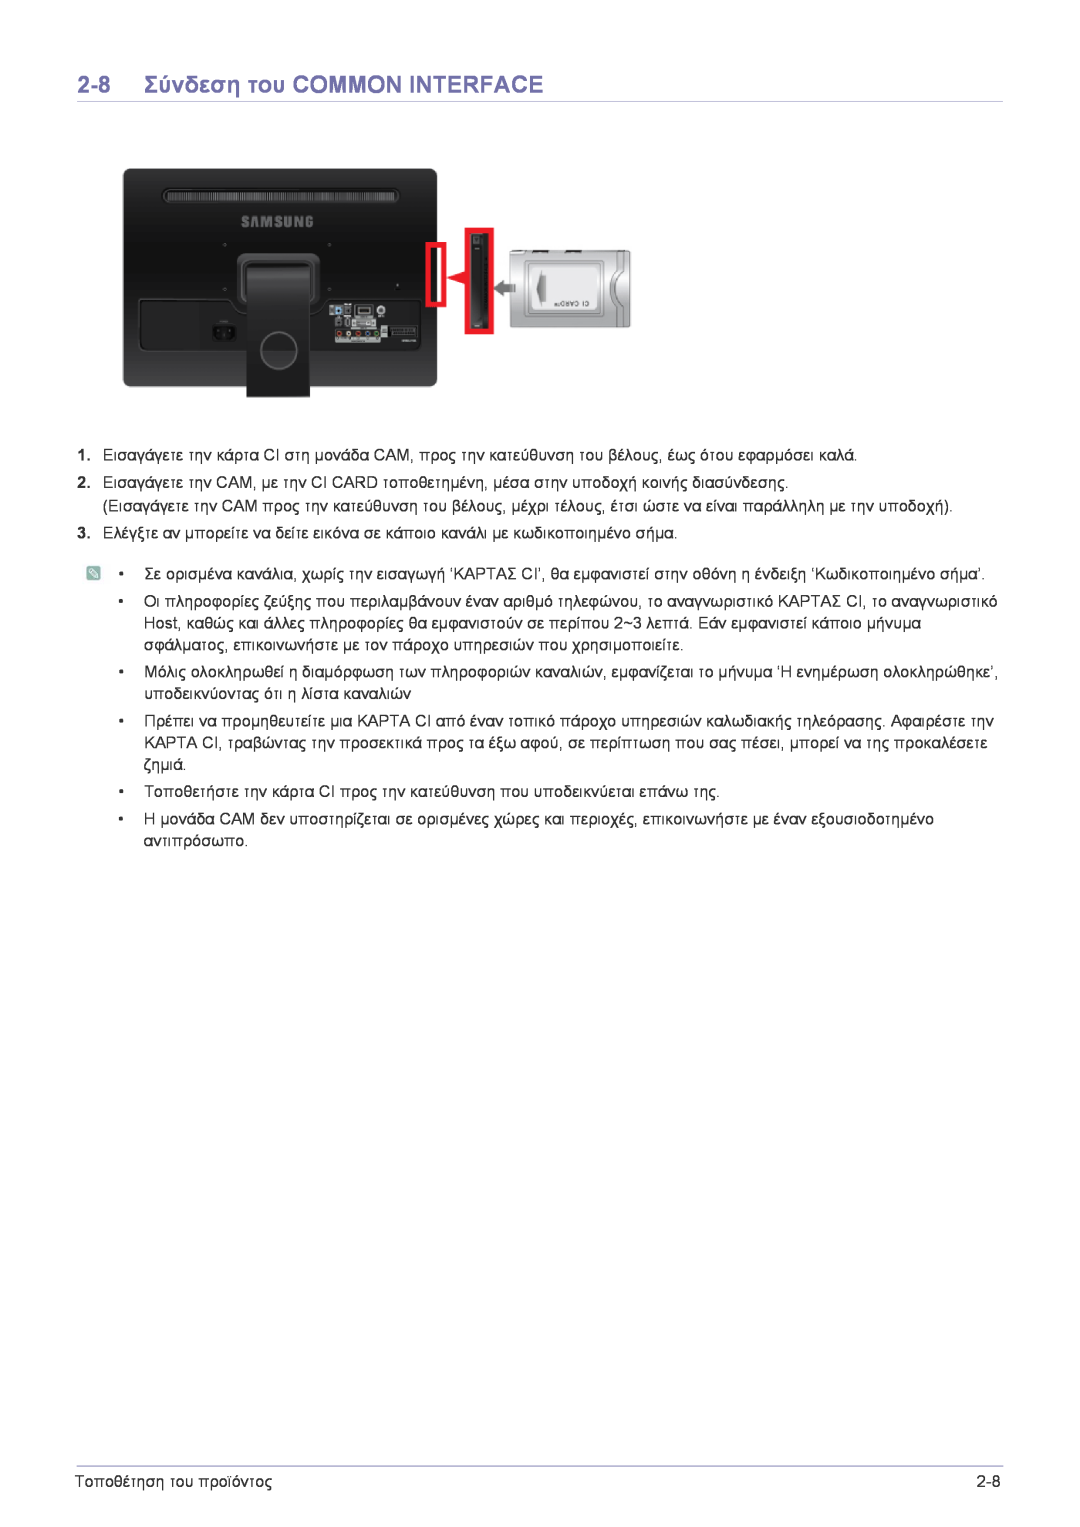 Samsung LS22FMDGF/XE, LS22FMDGF/EN manual 2-8 Σύνδεση του COMMON INTERFACE 